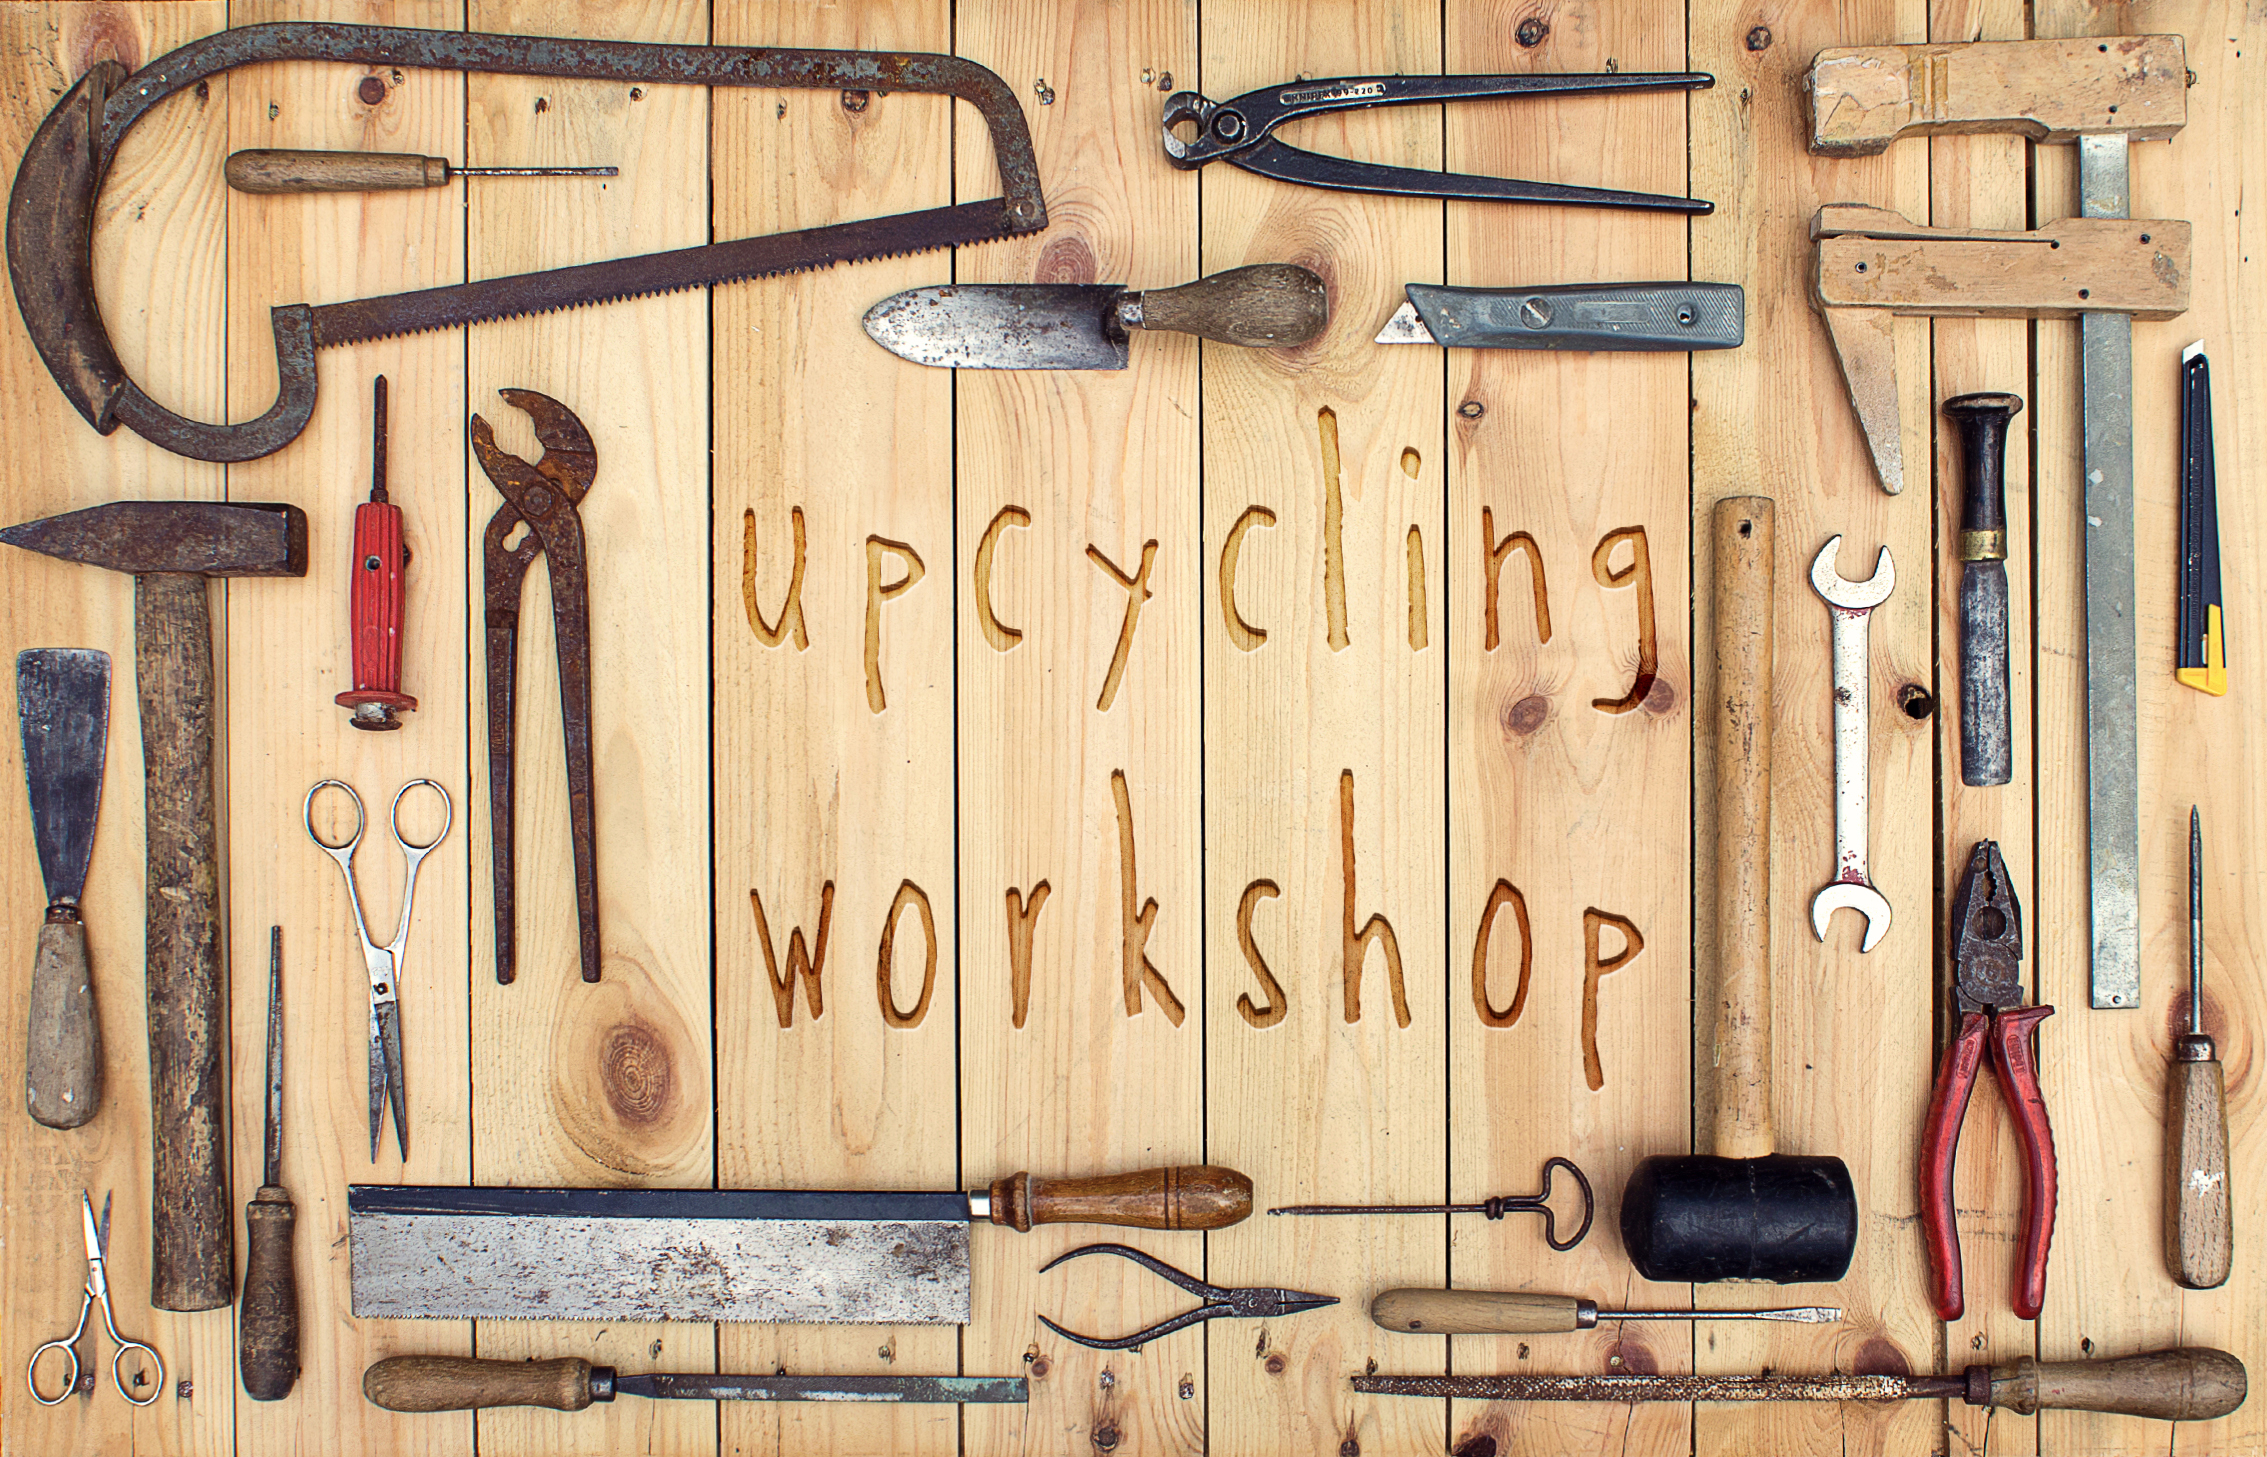 Upcycling Workshops